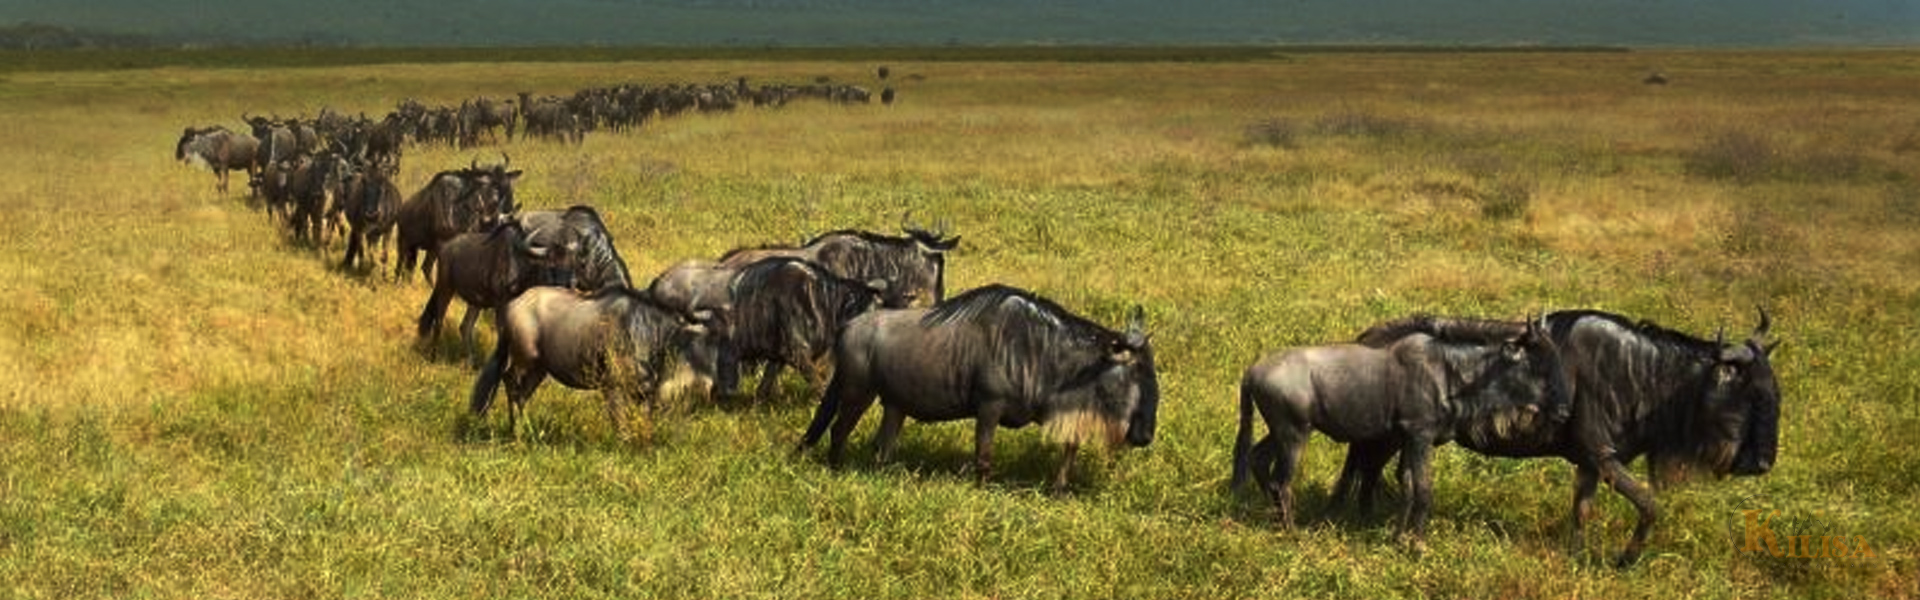 Tanzania Wildlife Safari (Lake Manyara / Ngorongoro Crater / Serengeti)